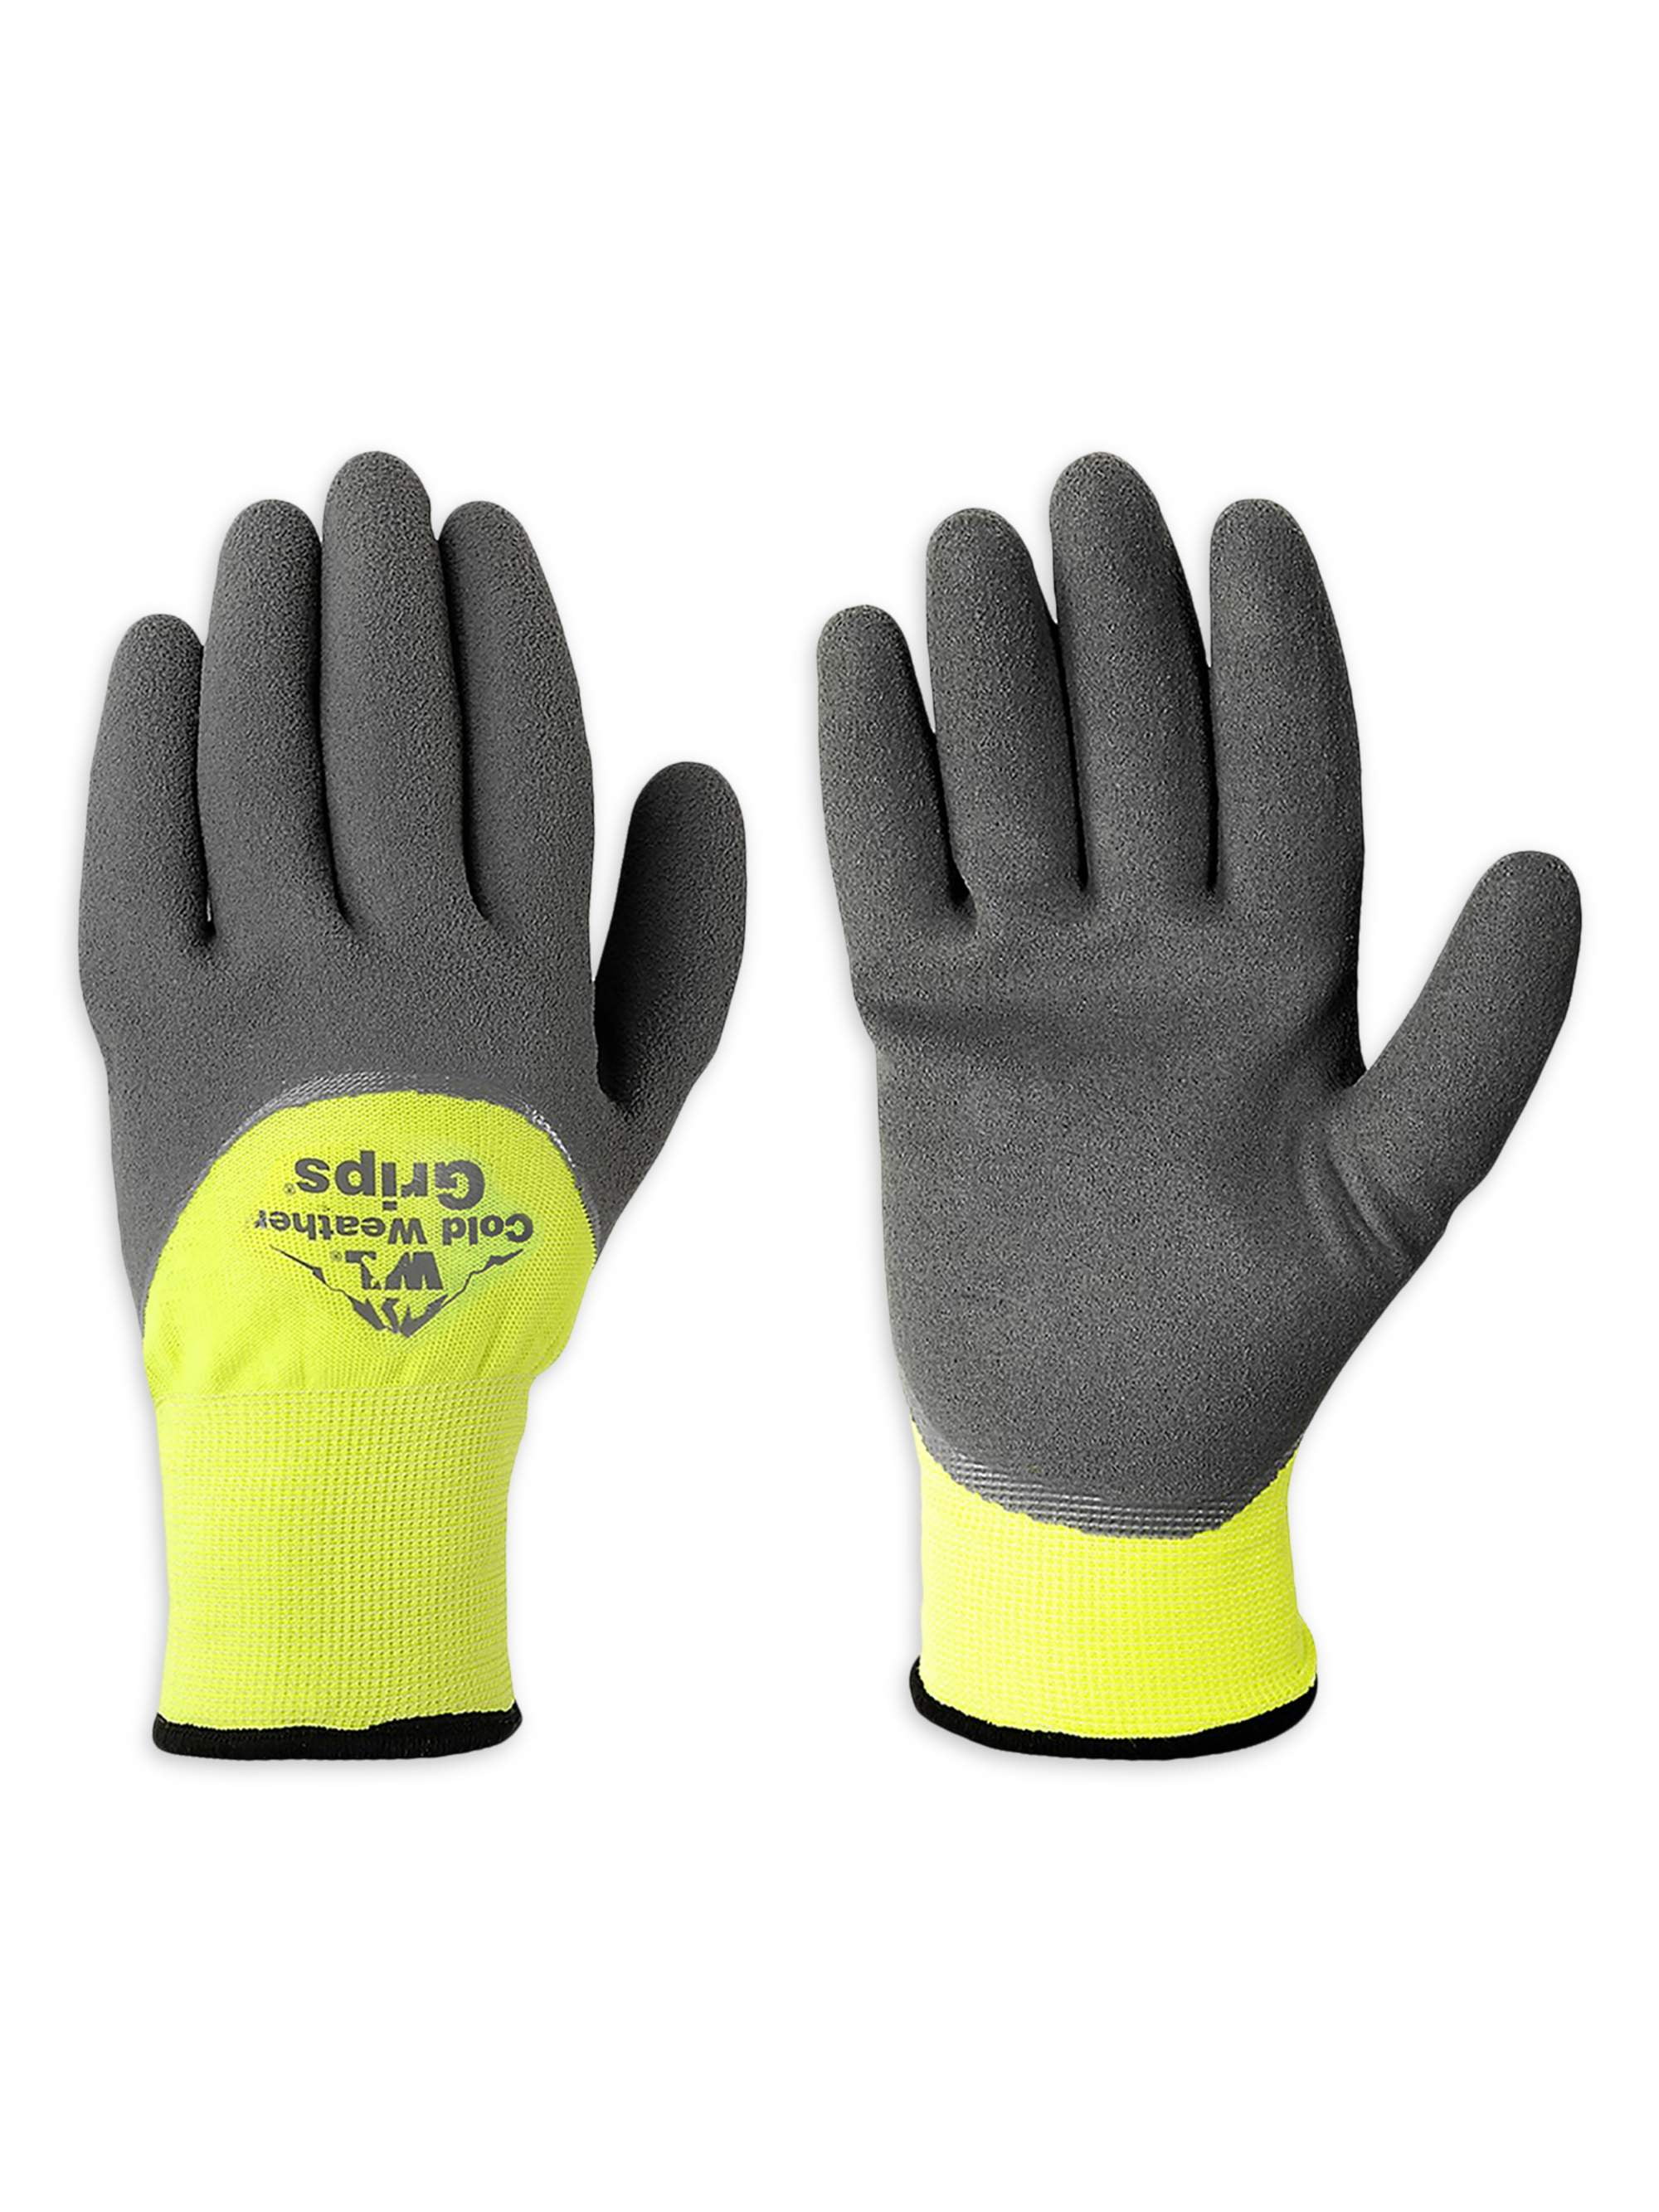 Wells Lamont Men's Lined Nitrile Glove